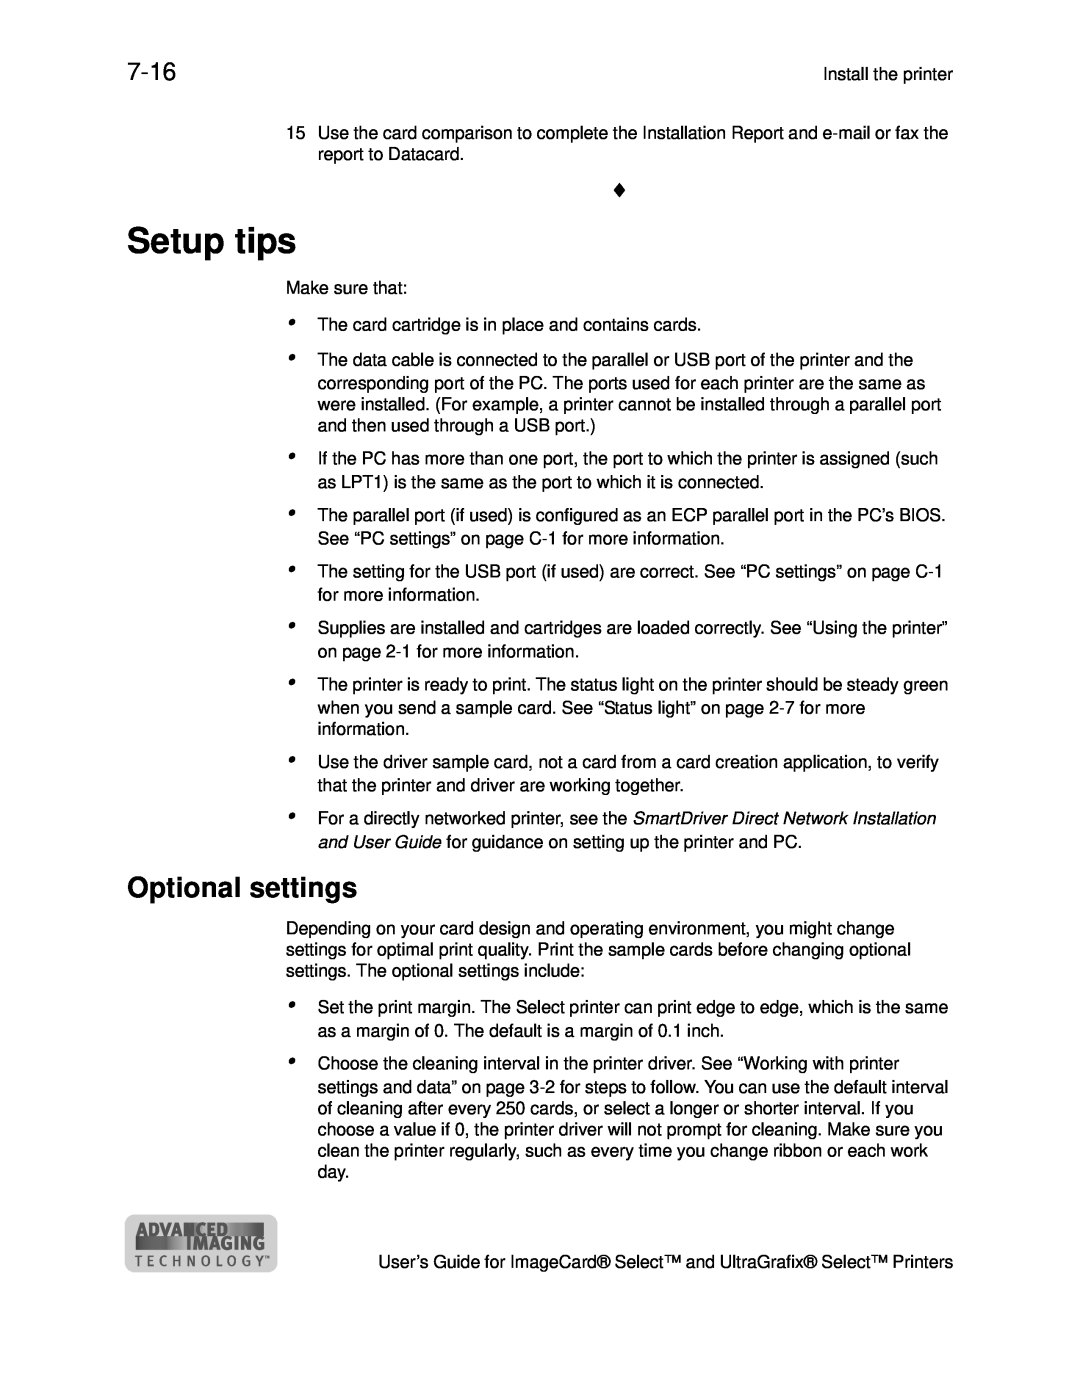 Datacard Group ImageCard SelectTM and UltraGrafix SelectTM Printers manual Setup tips, Optional settings, 7-16 